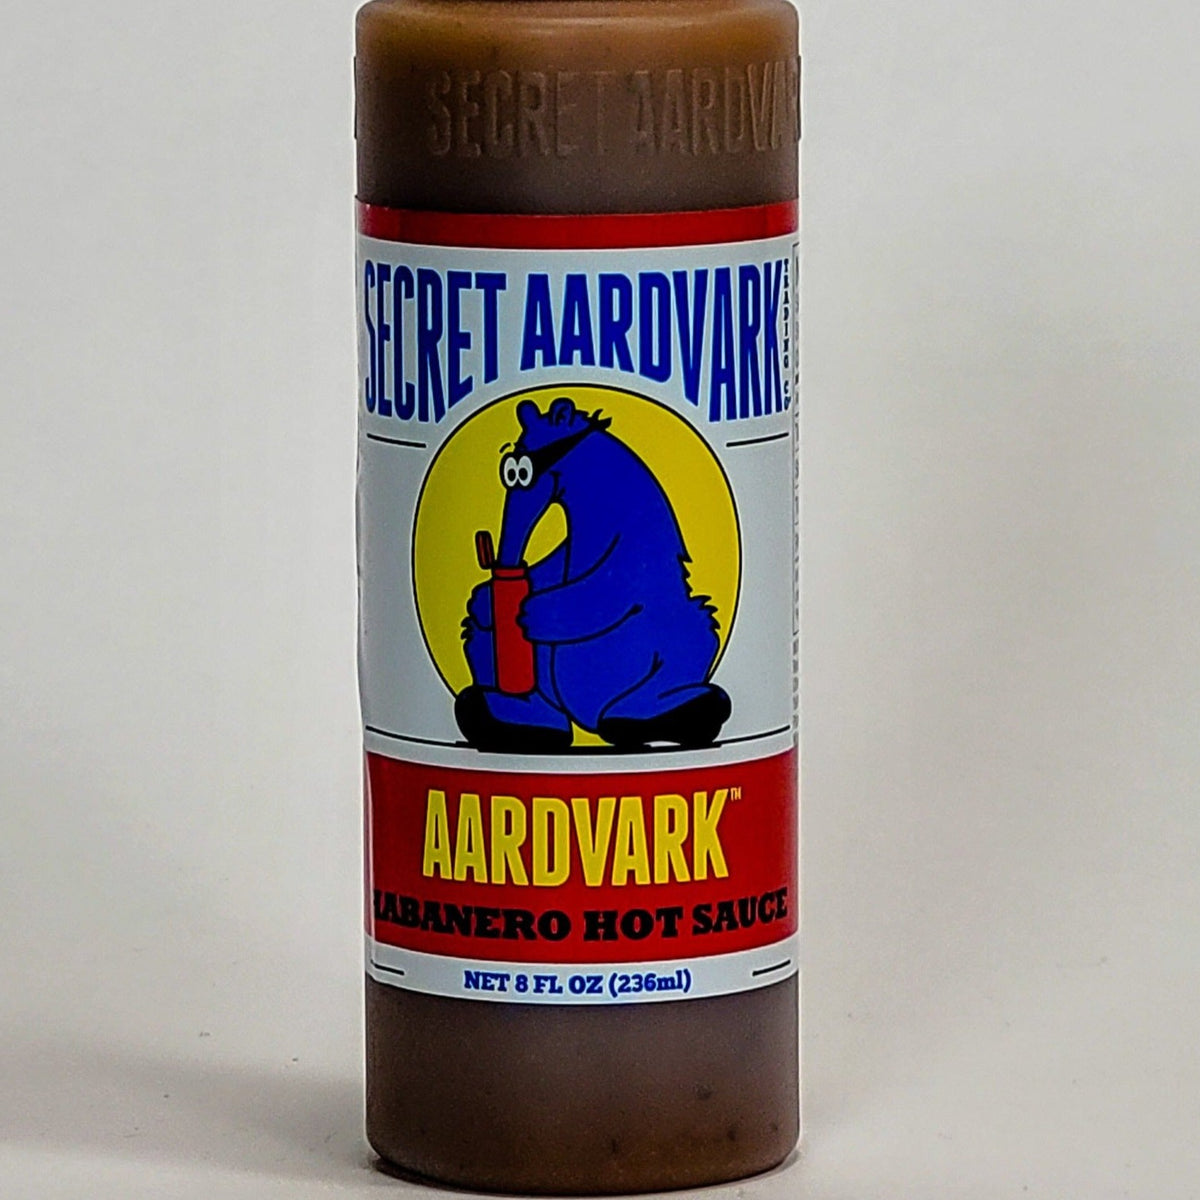 secret aardvark habanero hot sauce label